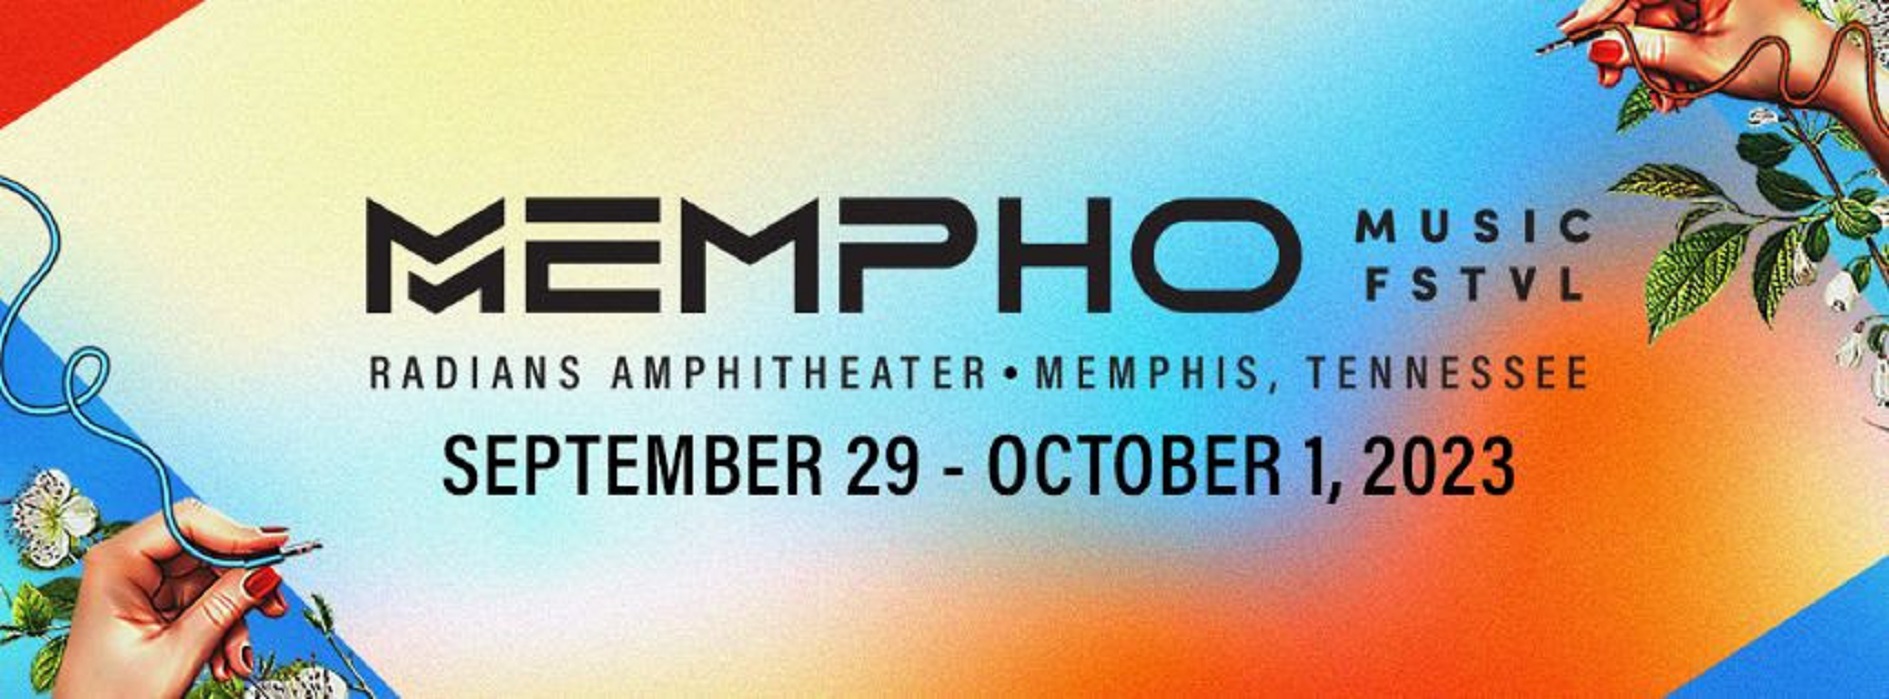 MEMPHO MUSIC FESTIVAL Confirms Schedule for September 29-October 3, 2023 Event